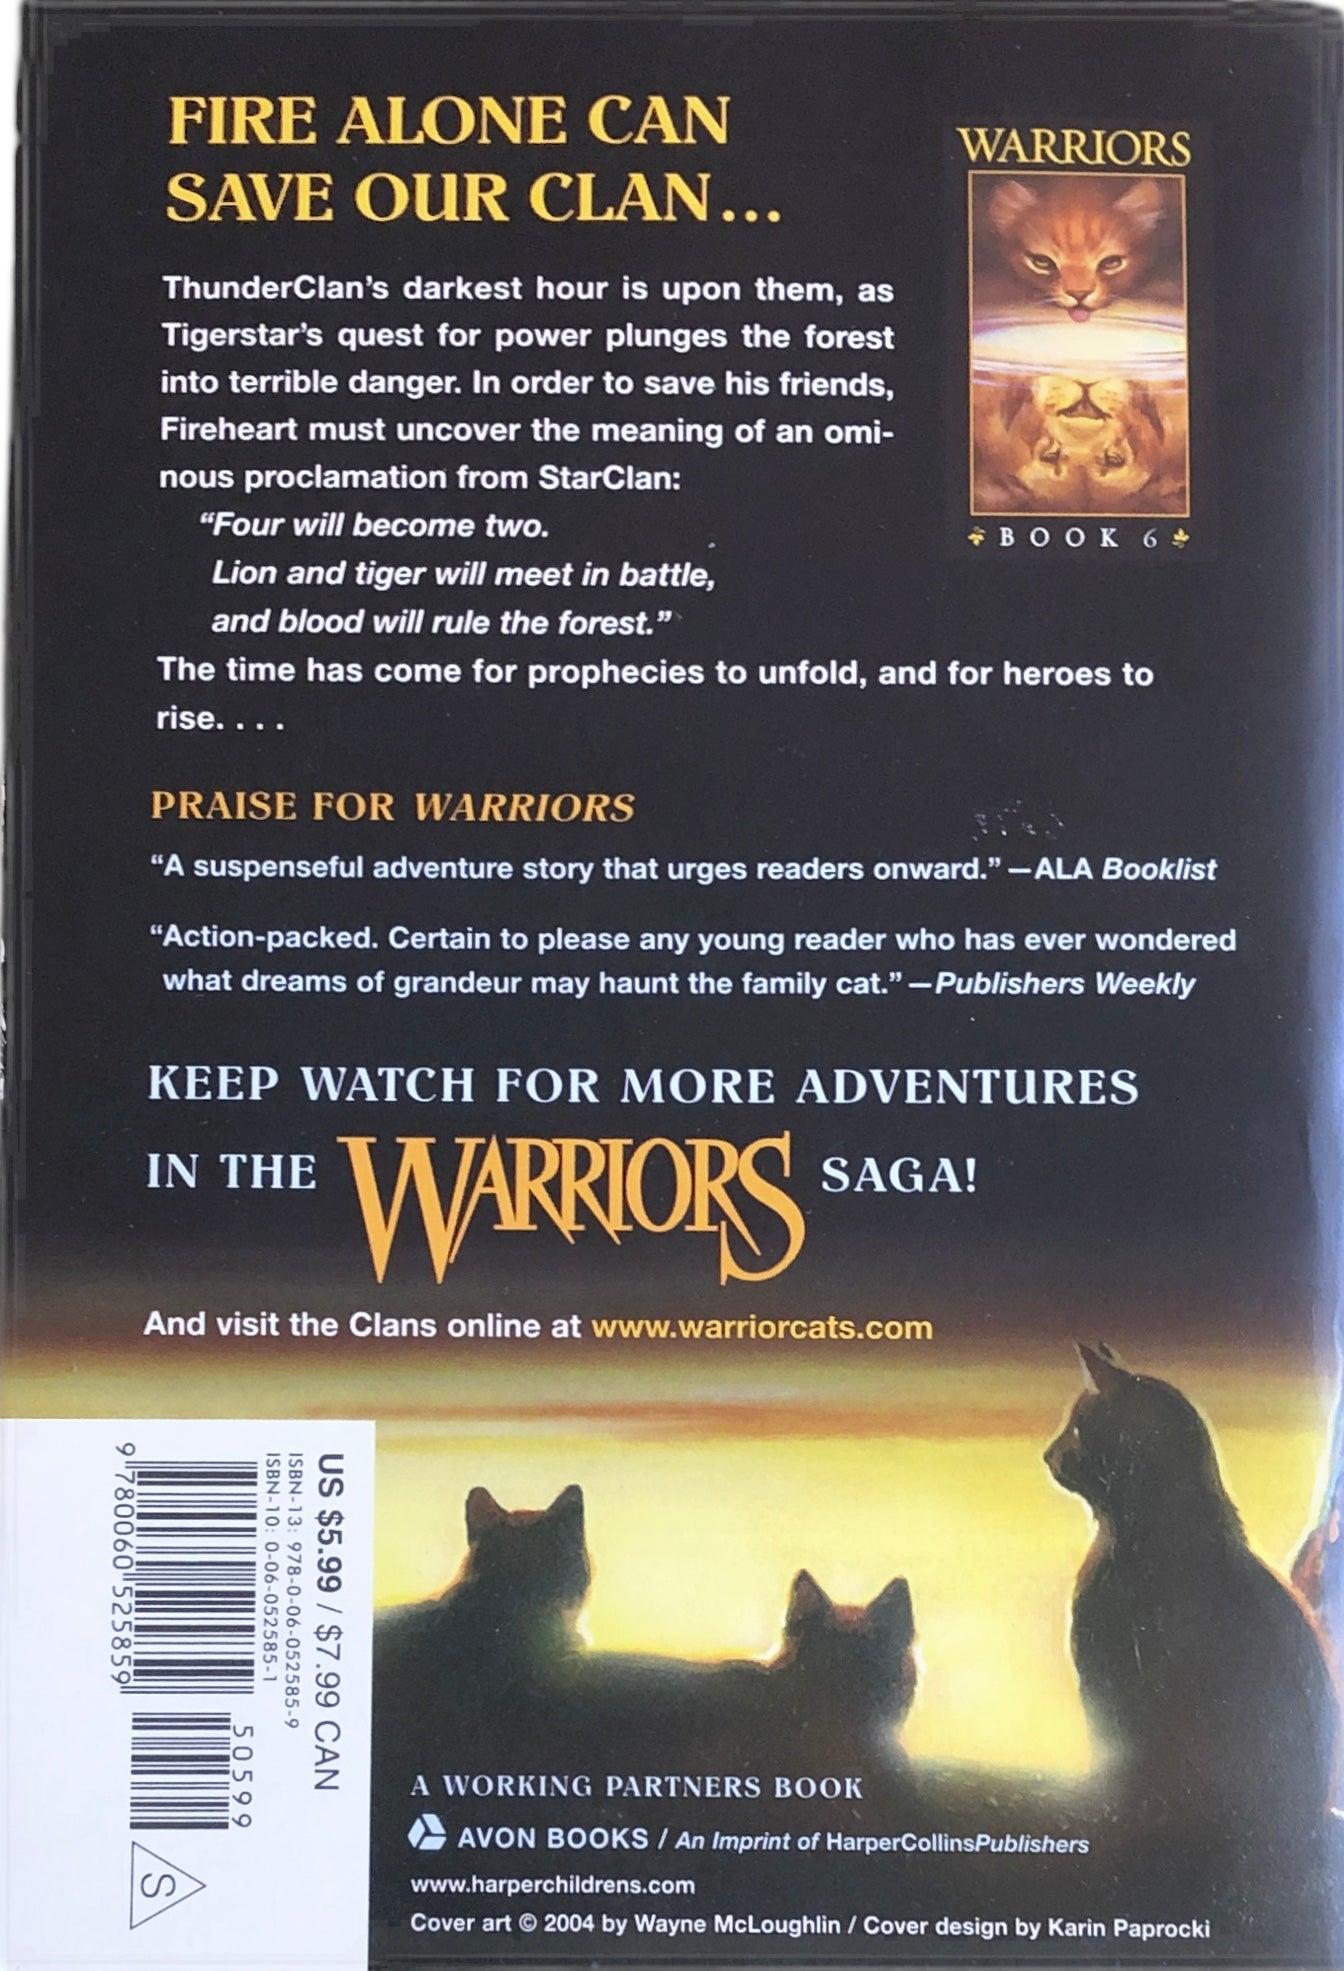 Read The Darkest Hour (Warriors 2) by Erin Hunter Online Free - AllFreeNovel